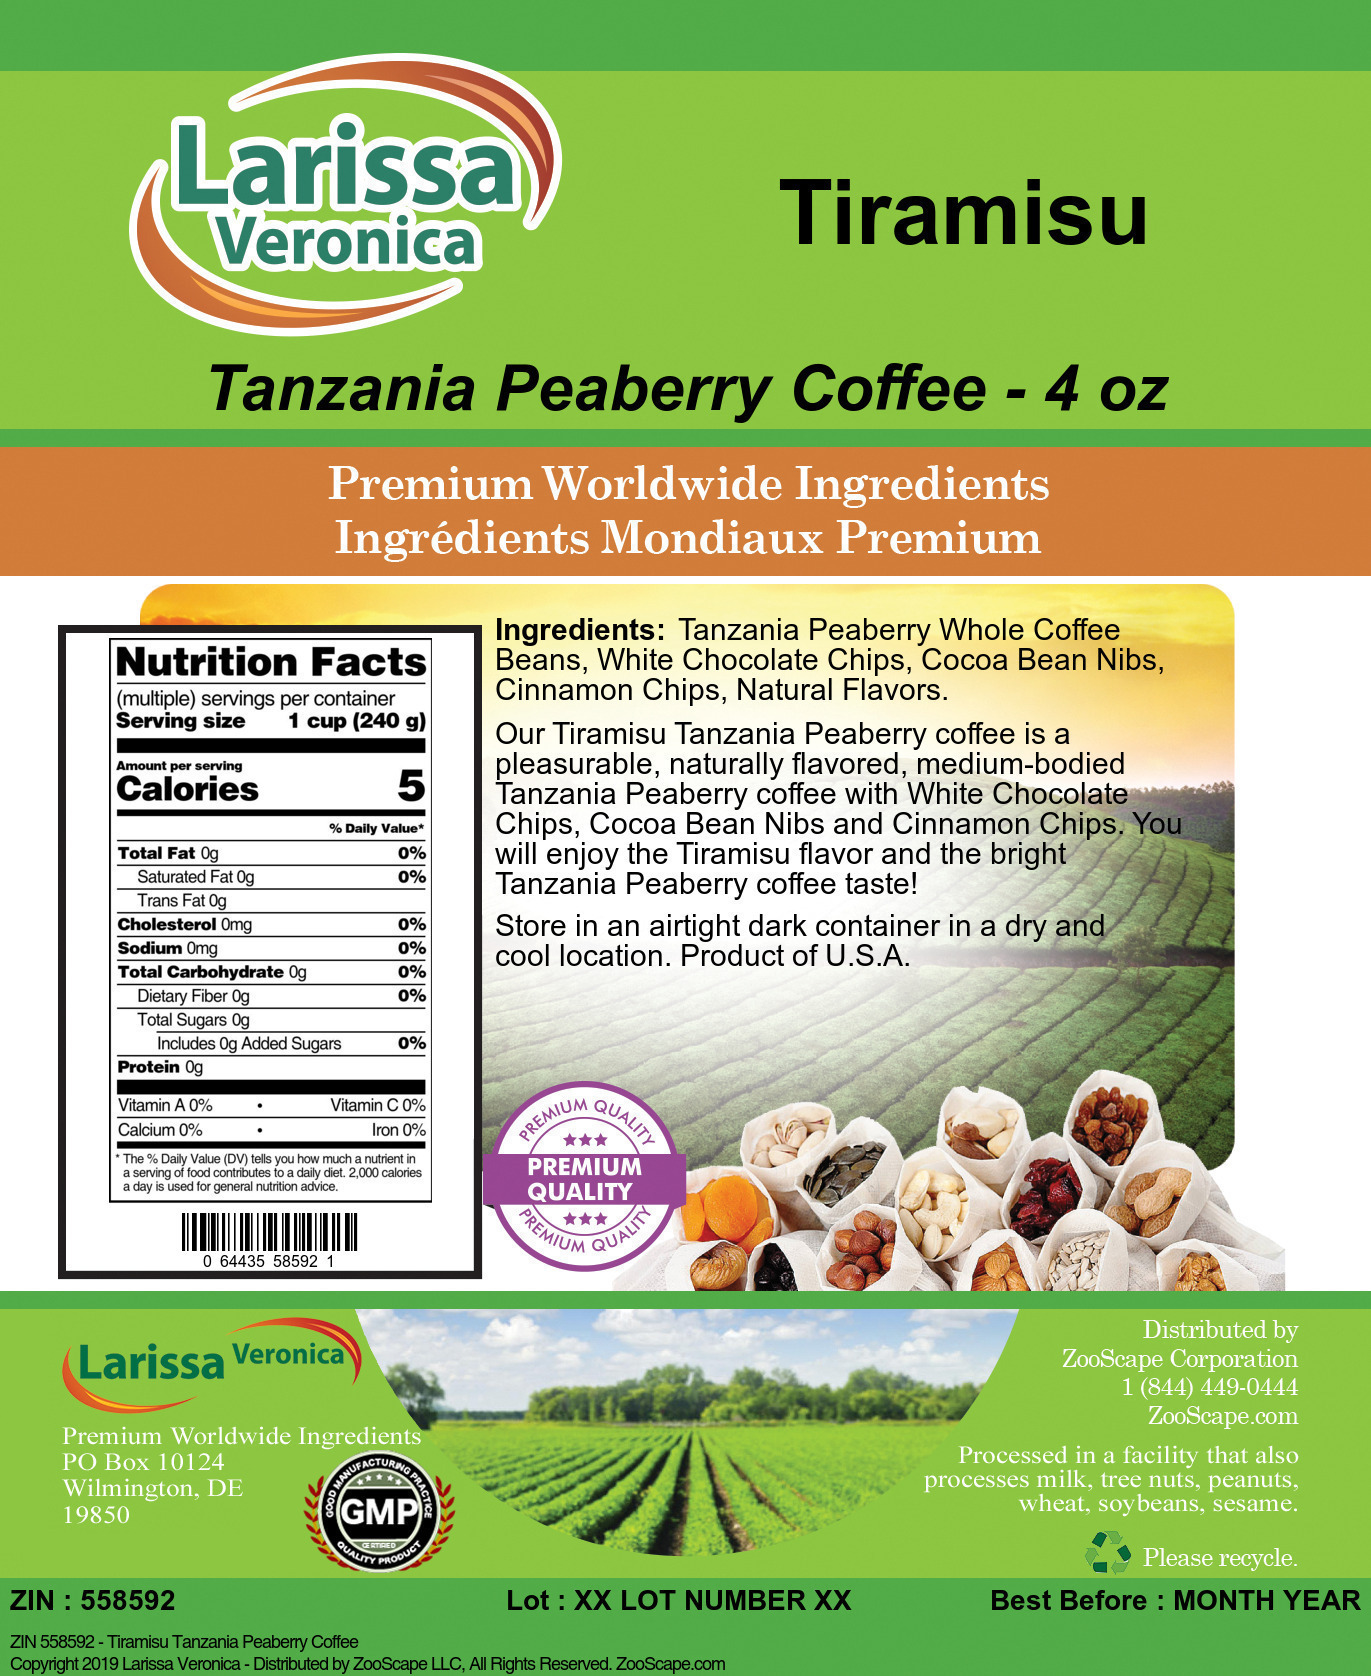 Tiramisu Tanzania Peaberry Coffee - Label